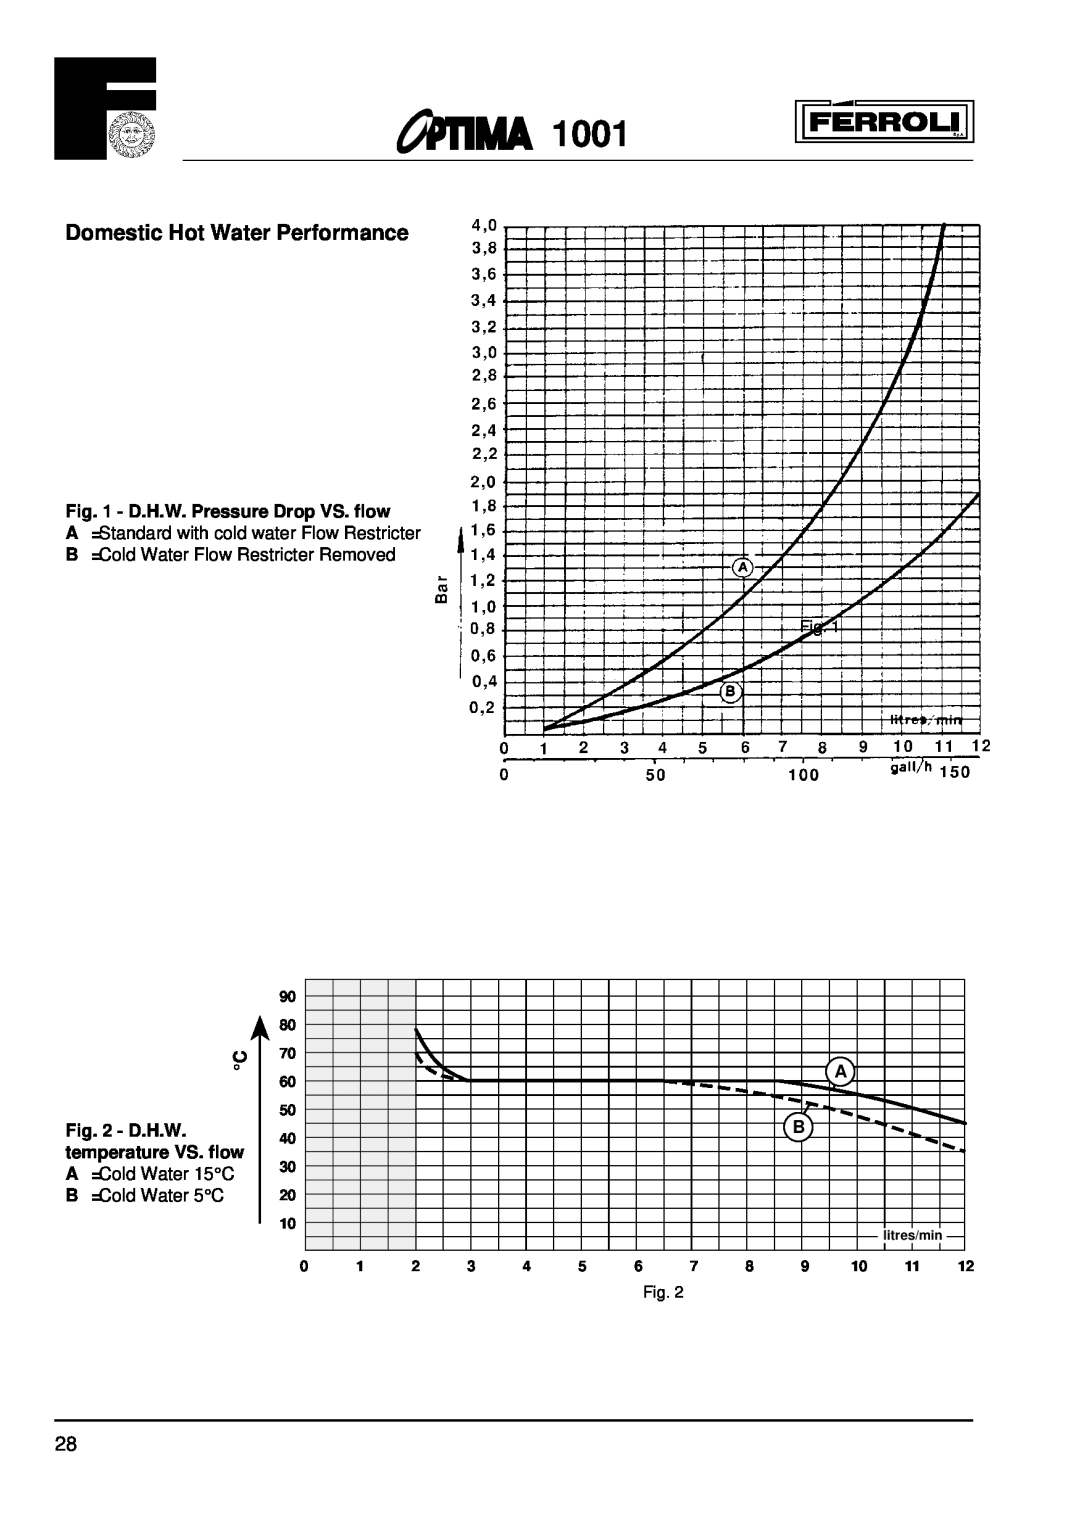 Optima Company 1001 D.H.W. Pressure Drop VS. flow, temperature VS. flow, =Cold Water 15C, =Cold Water 5C 